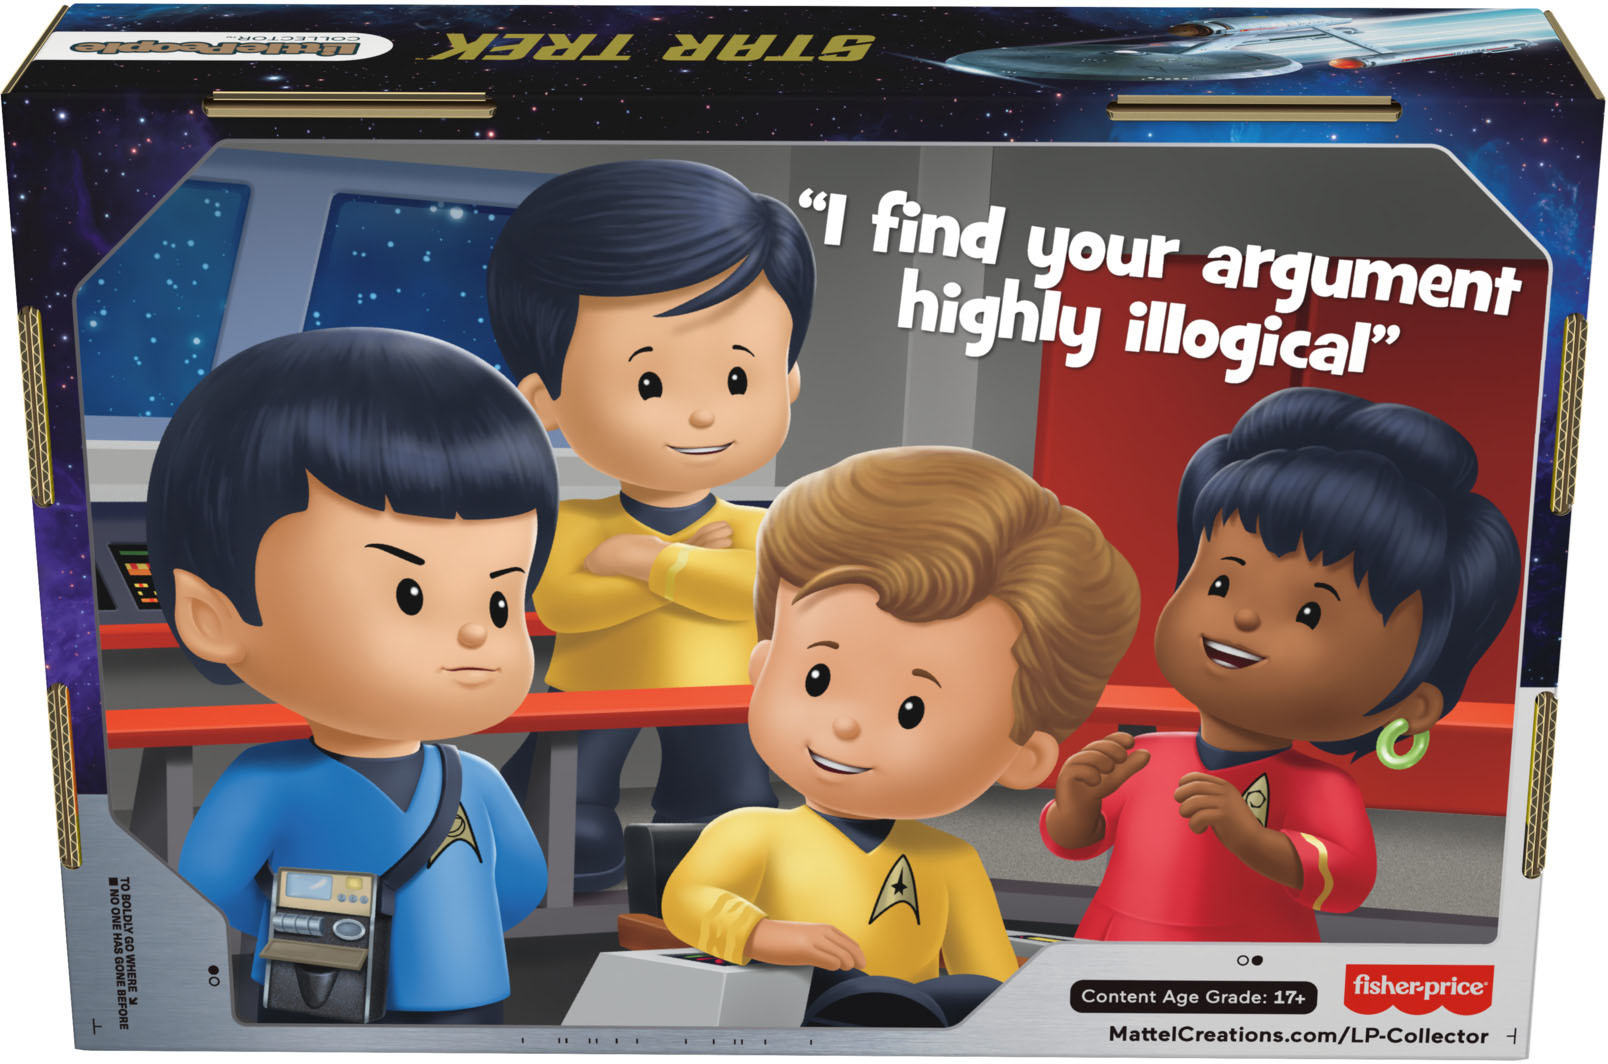 Star Trek The Original Series Little People Collector Figure Set